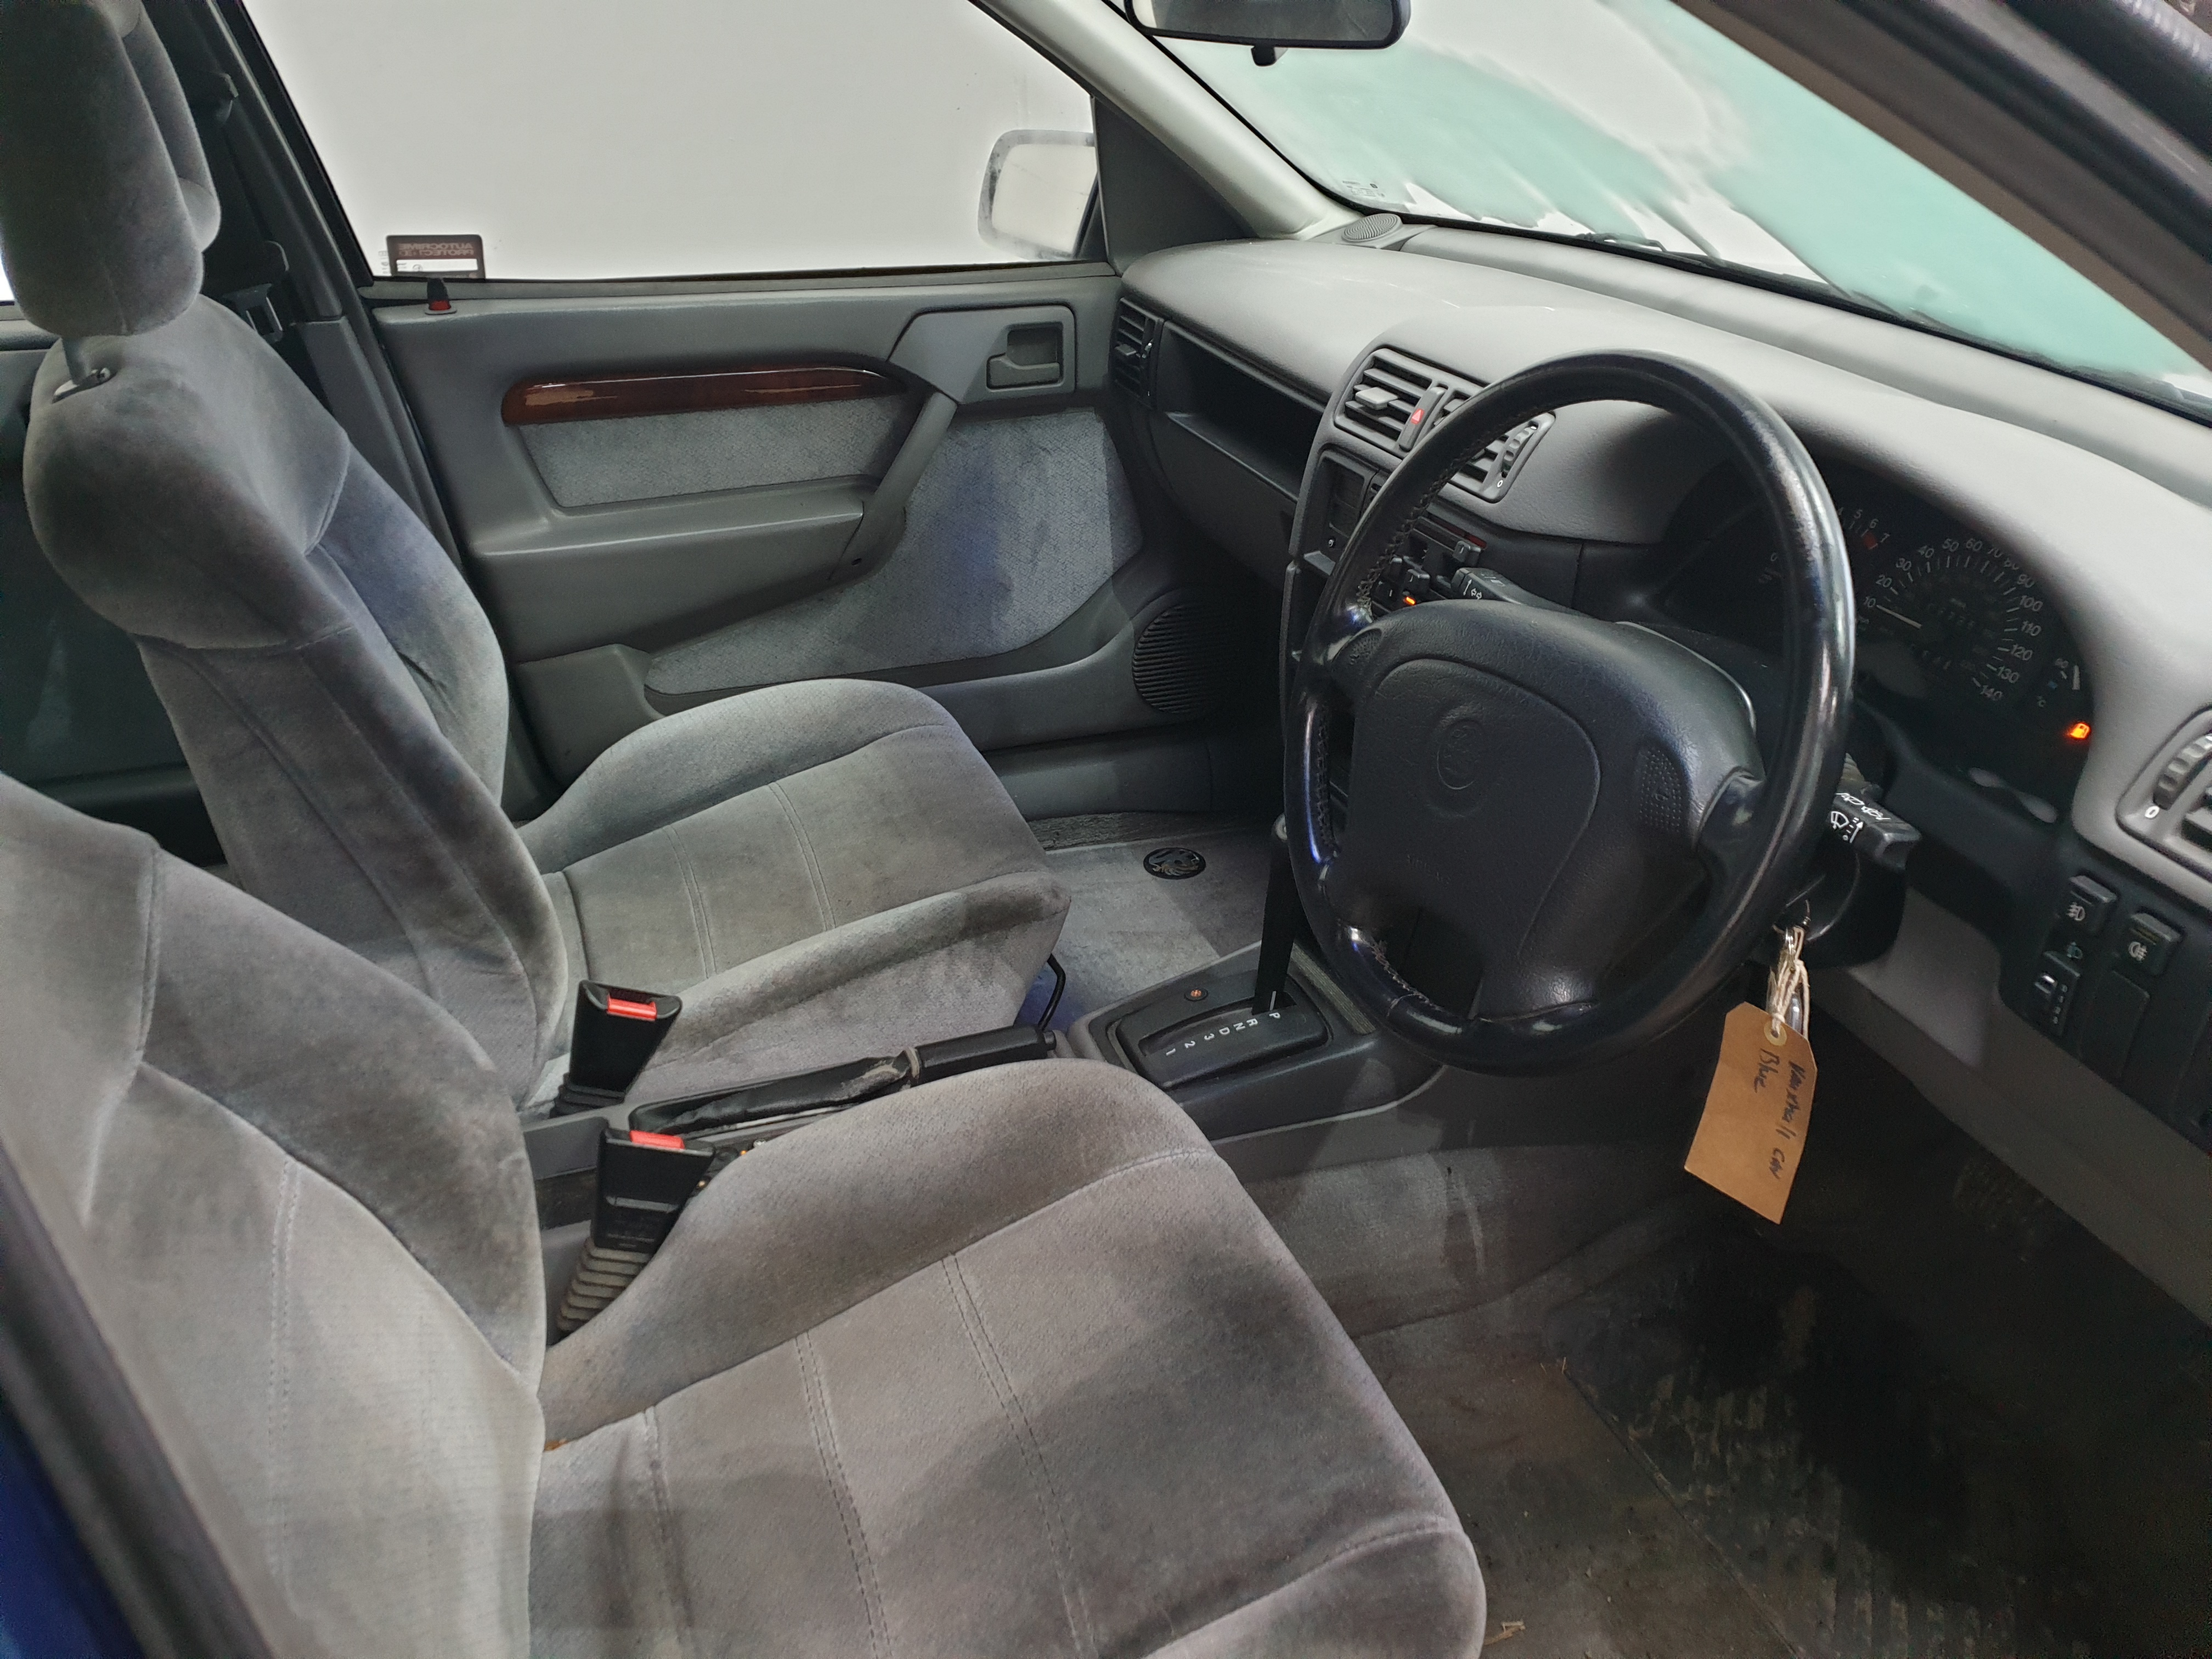 1994 Vauxhall Cavalier CD Auto - Image 15 of 16